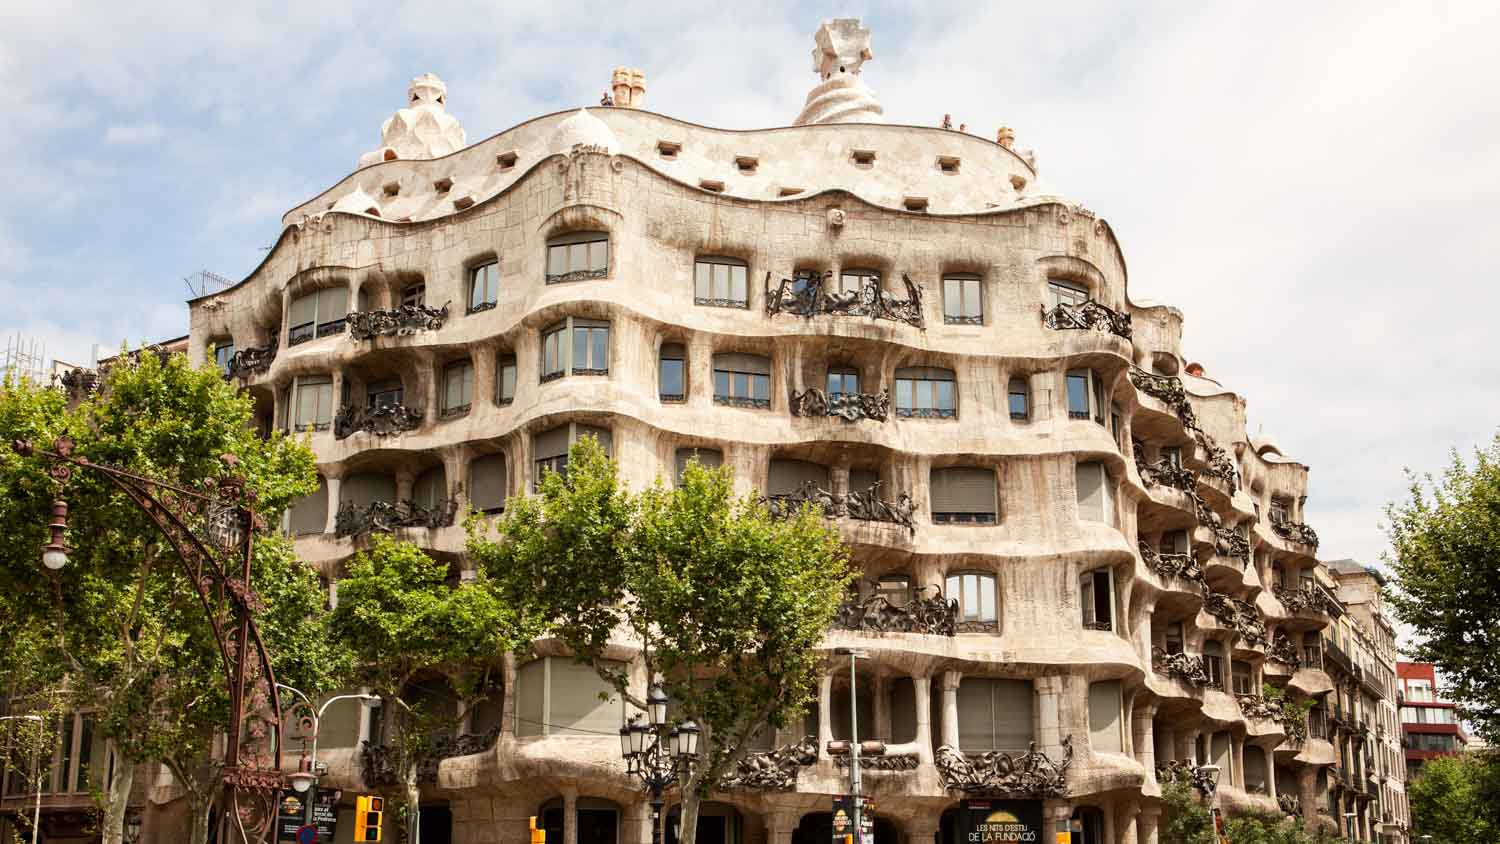 Casa Milà (La Pedrera) بهترین جاذبه برتر توریستی بارسلون